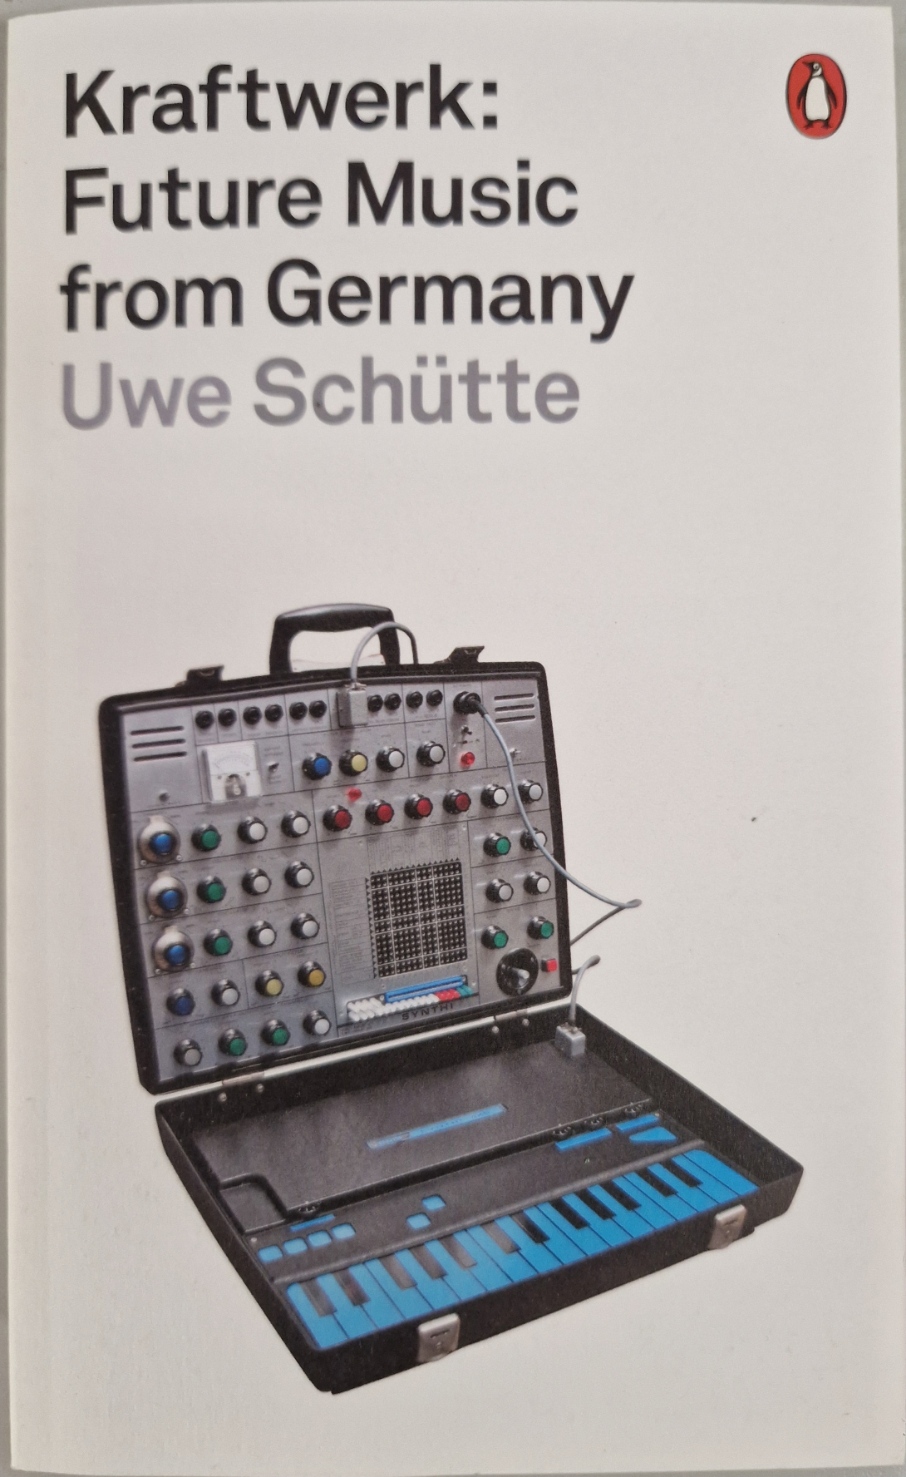 Kraftwerk: Future Music from Germany